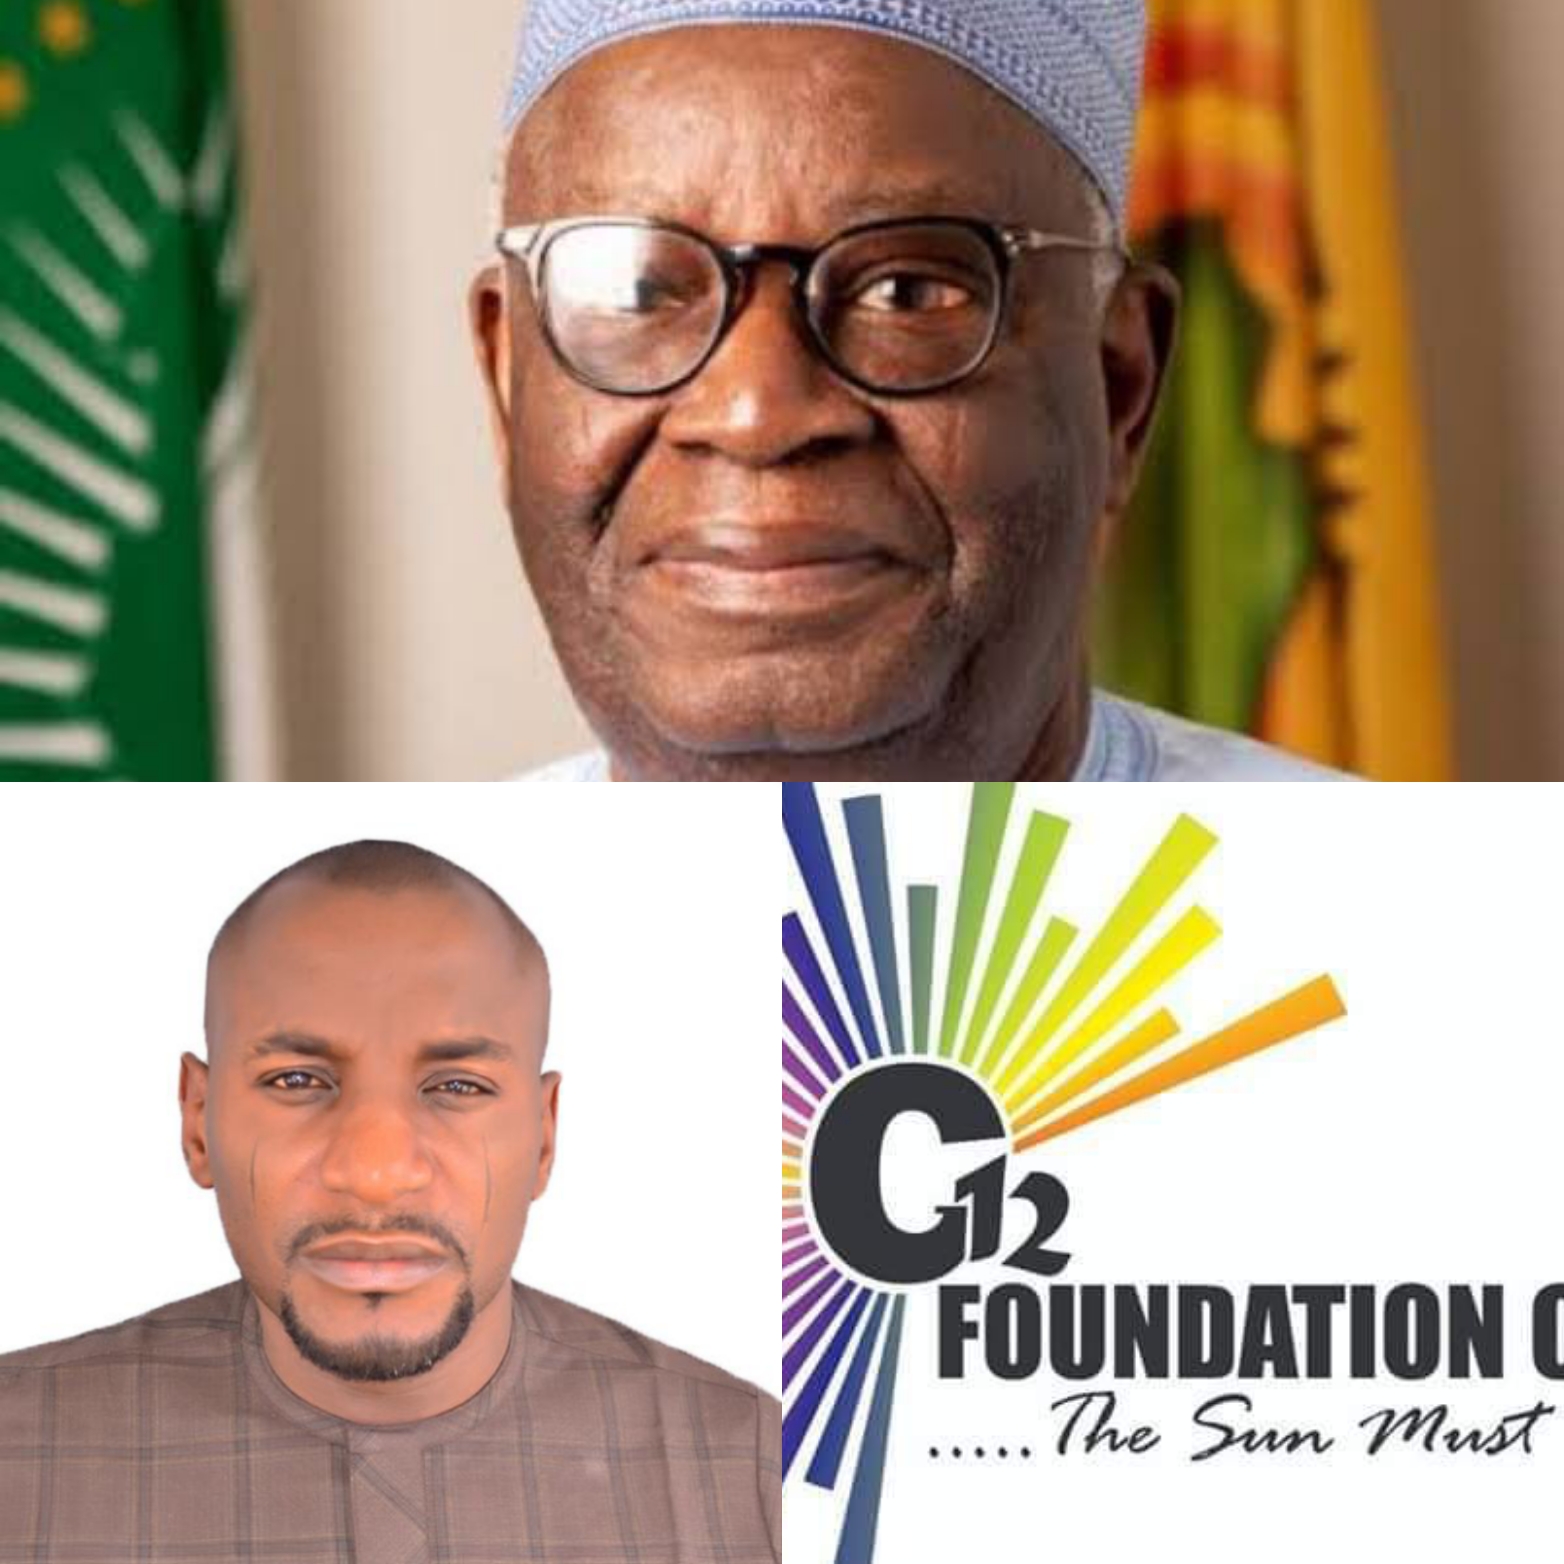 Buhari’s new Chief of Staff, Gambari acknowledges G12 Foundation Club